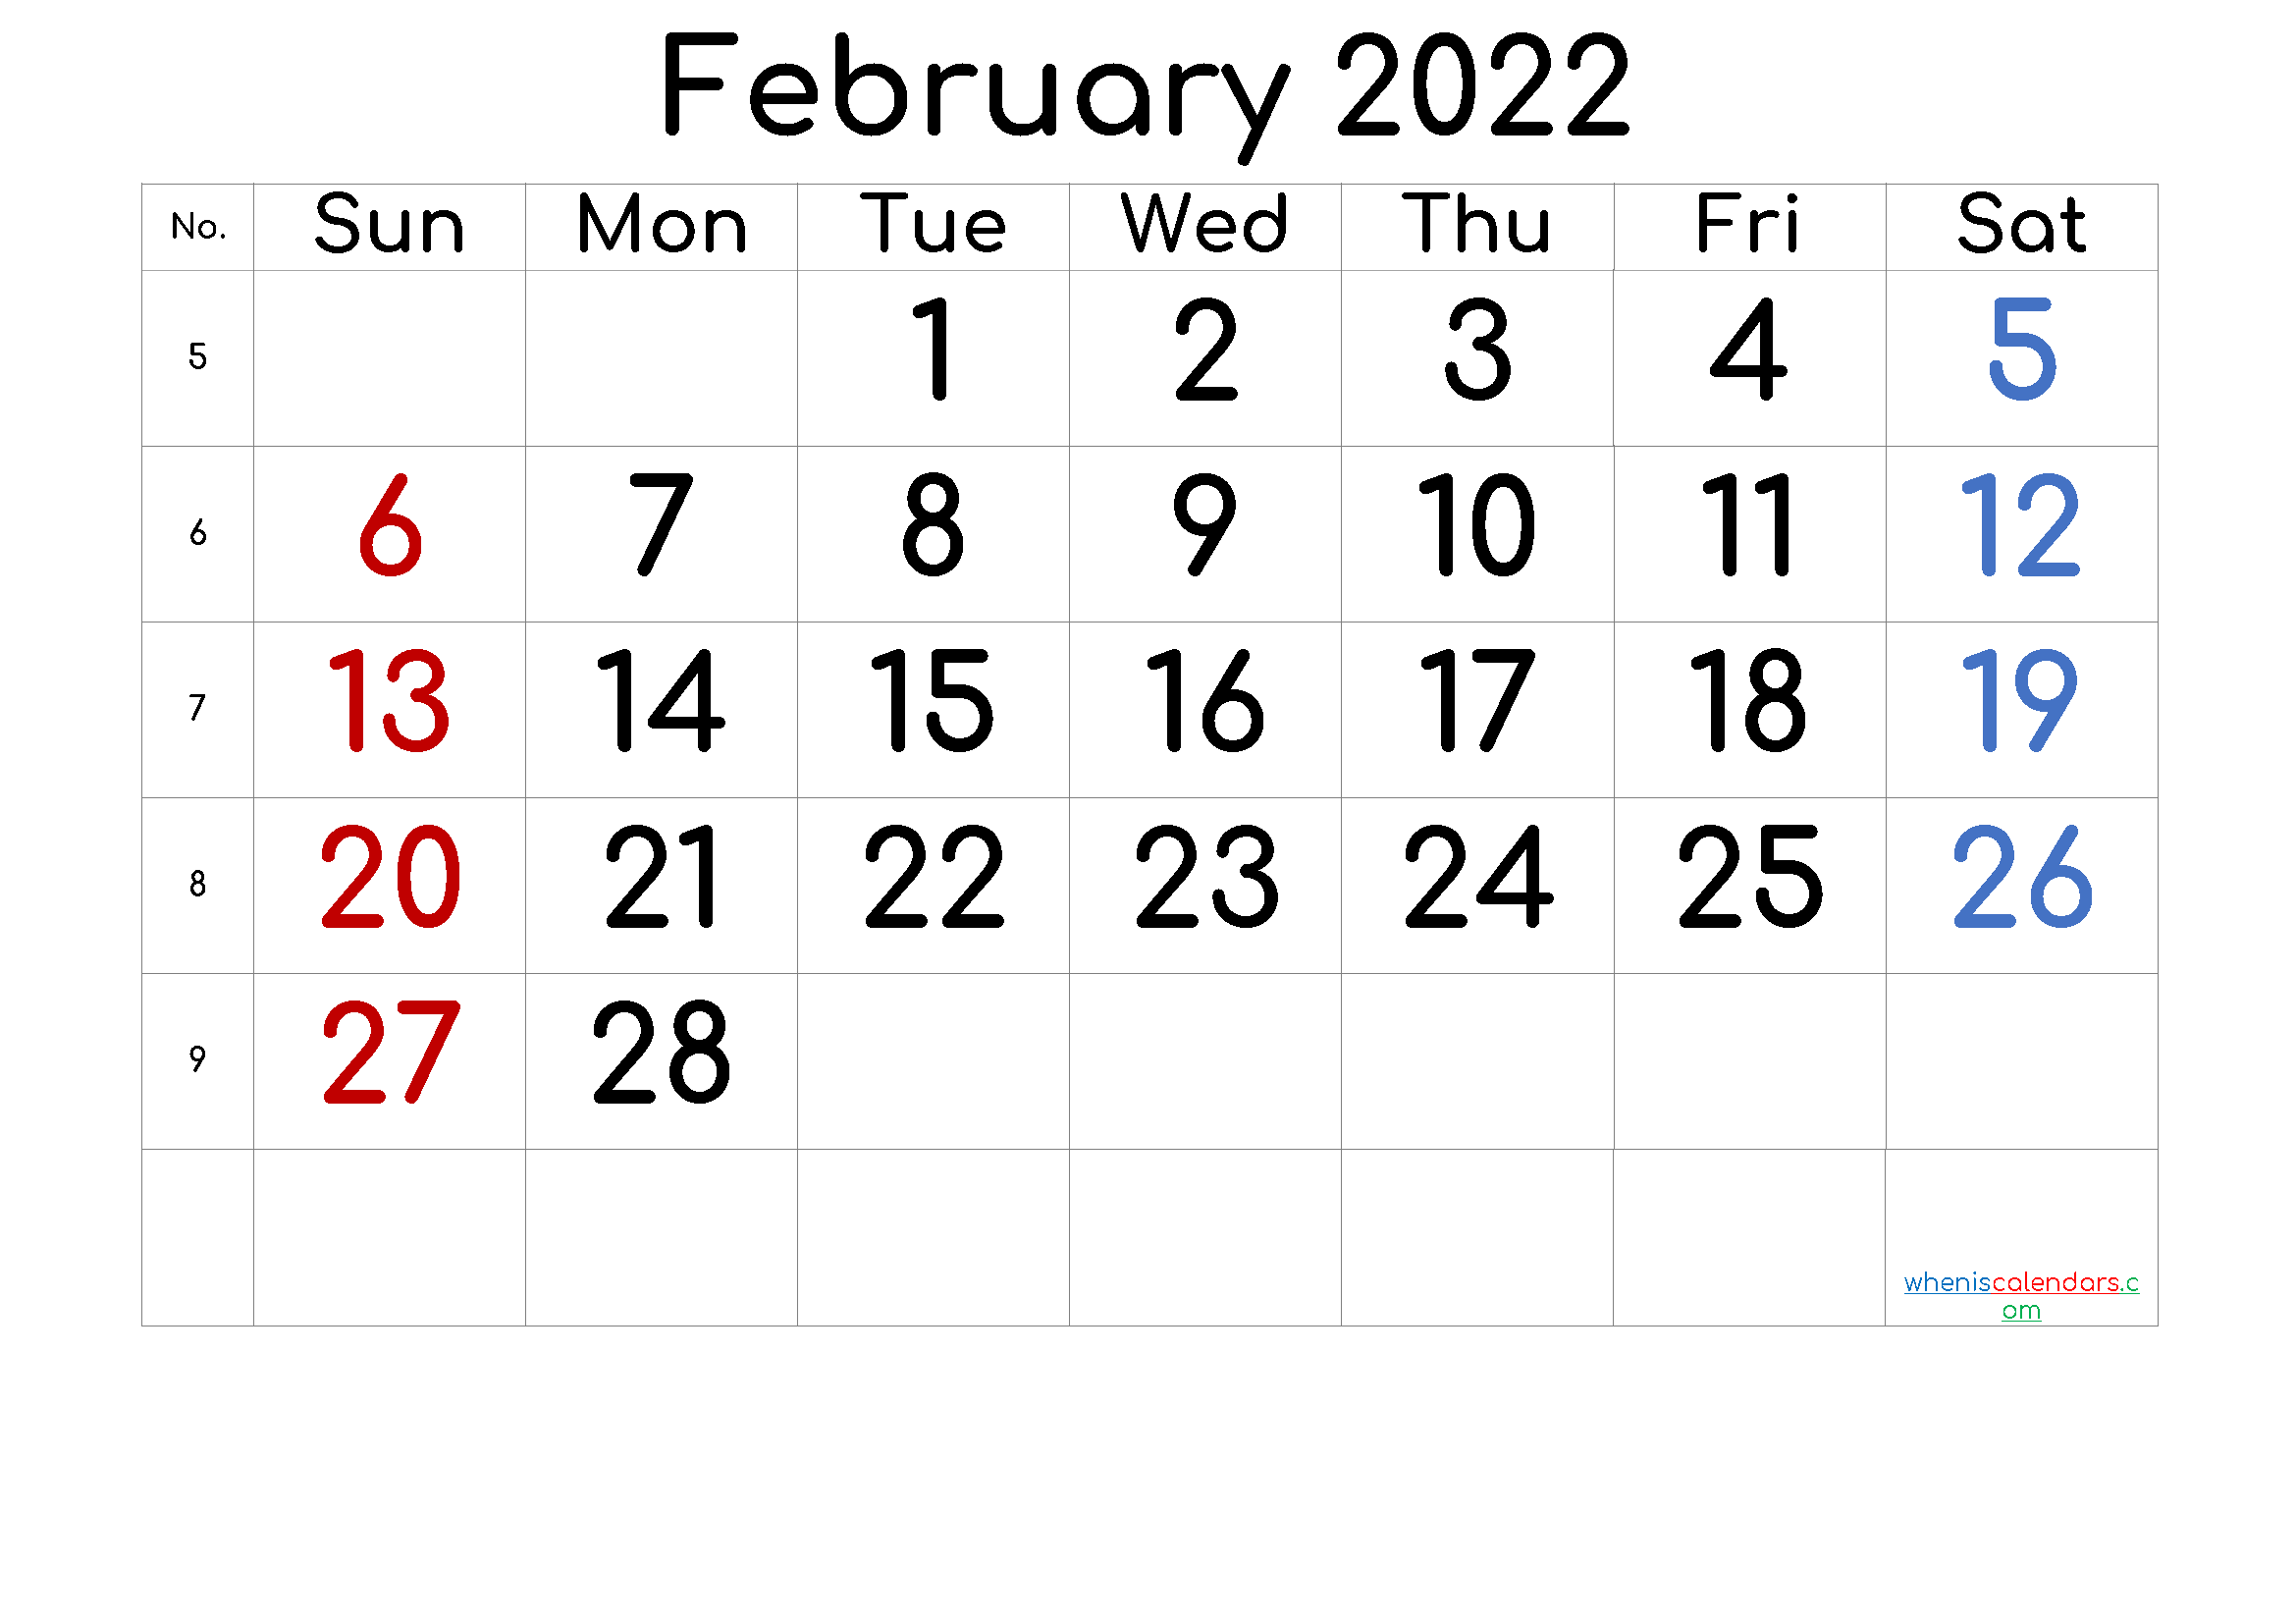 February 2022 Printable Calendar with Week Numbers